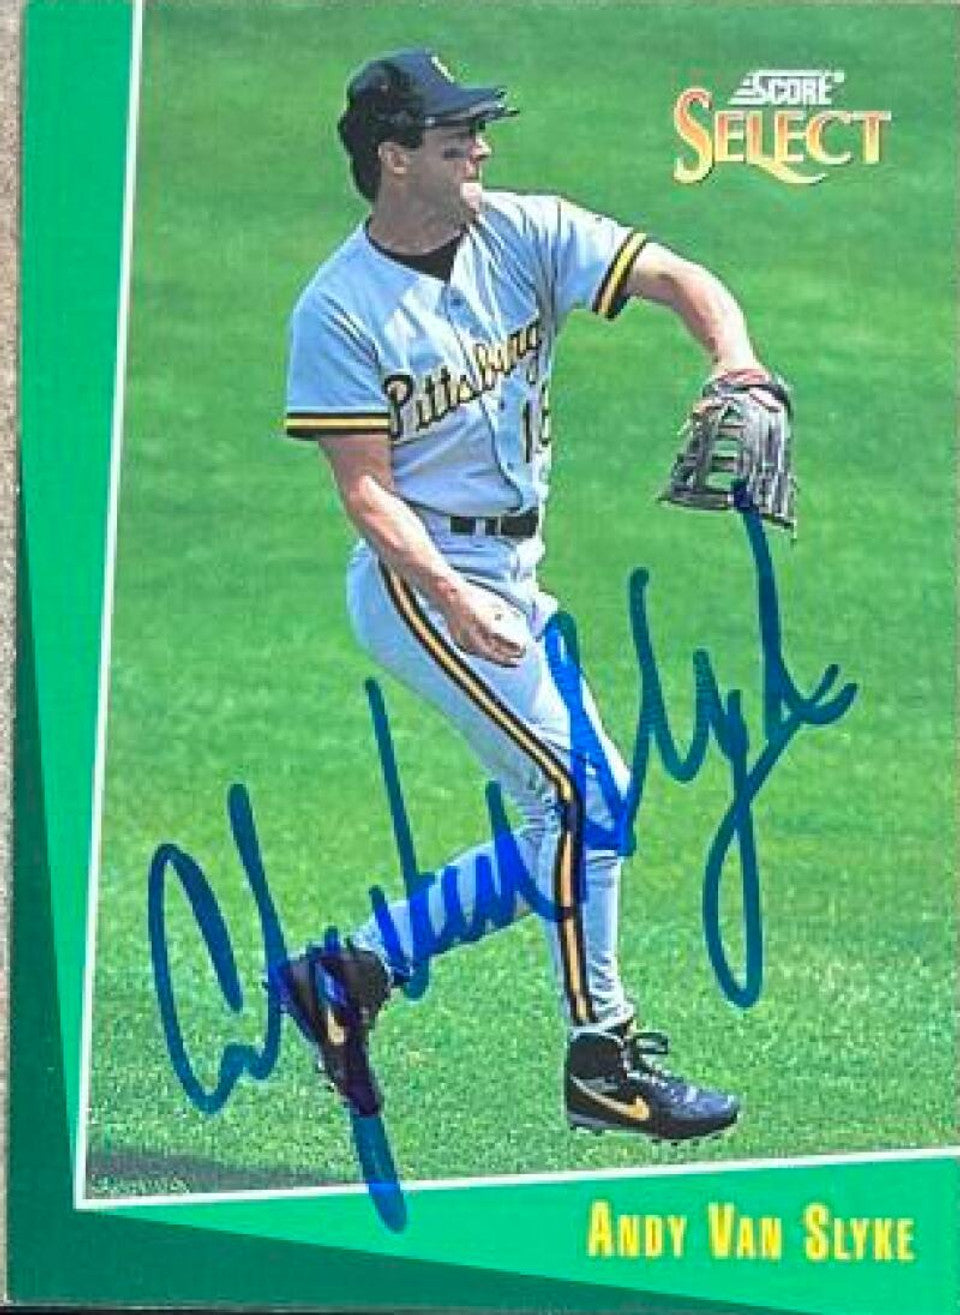 Andy Van Slyke Signed 1993 Score Select Baseball Card - Pittsburgh Pirates #35